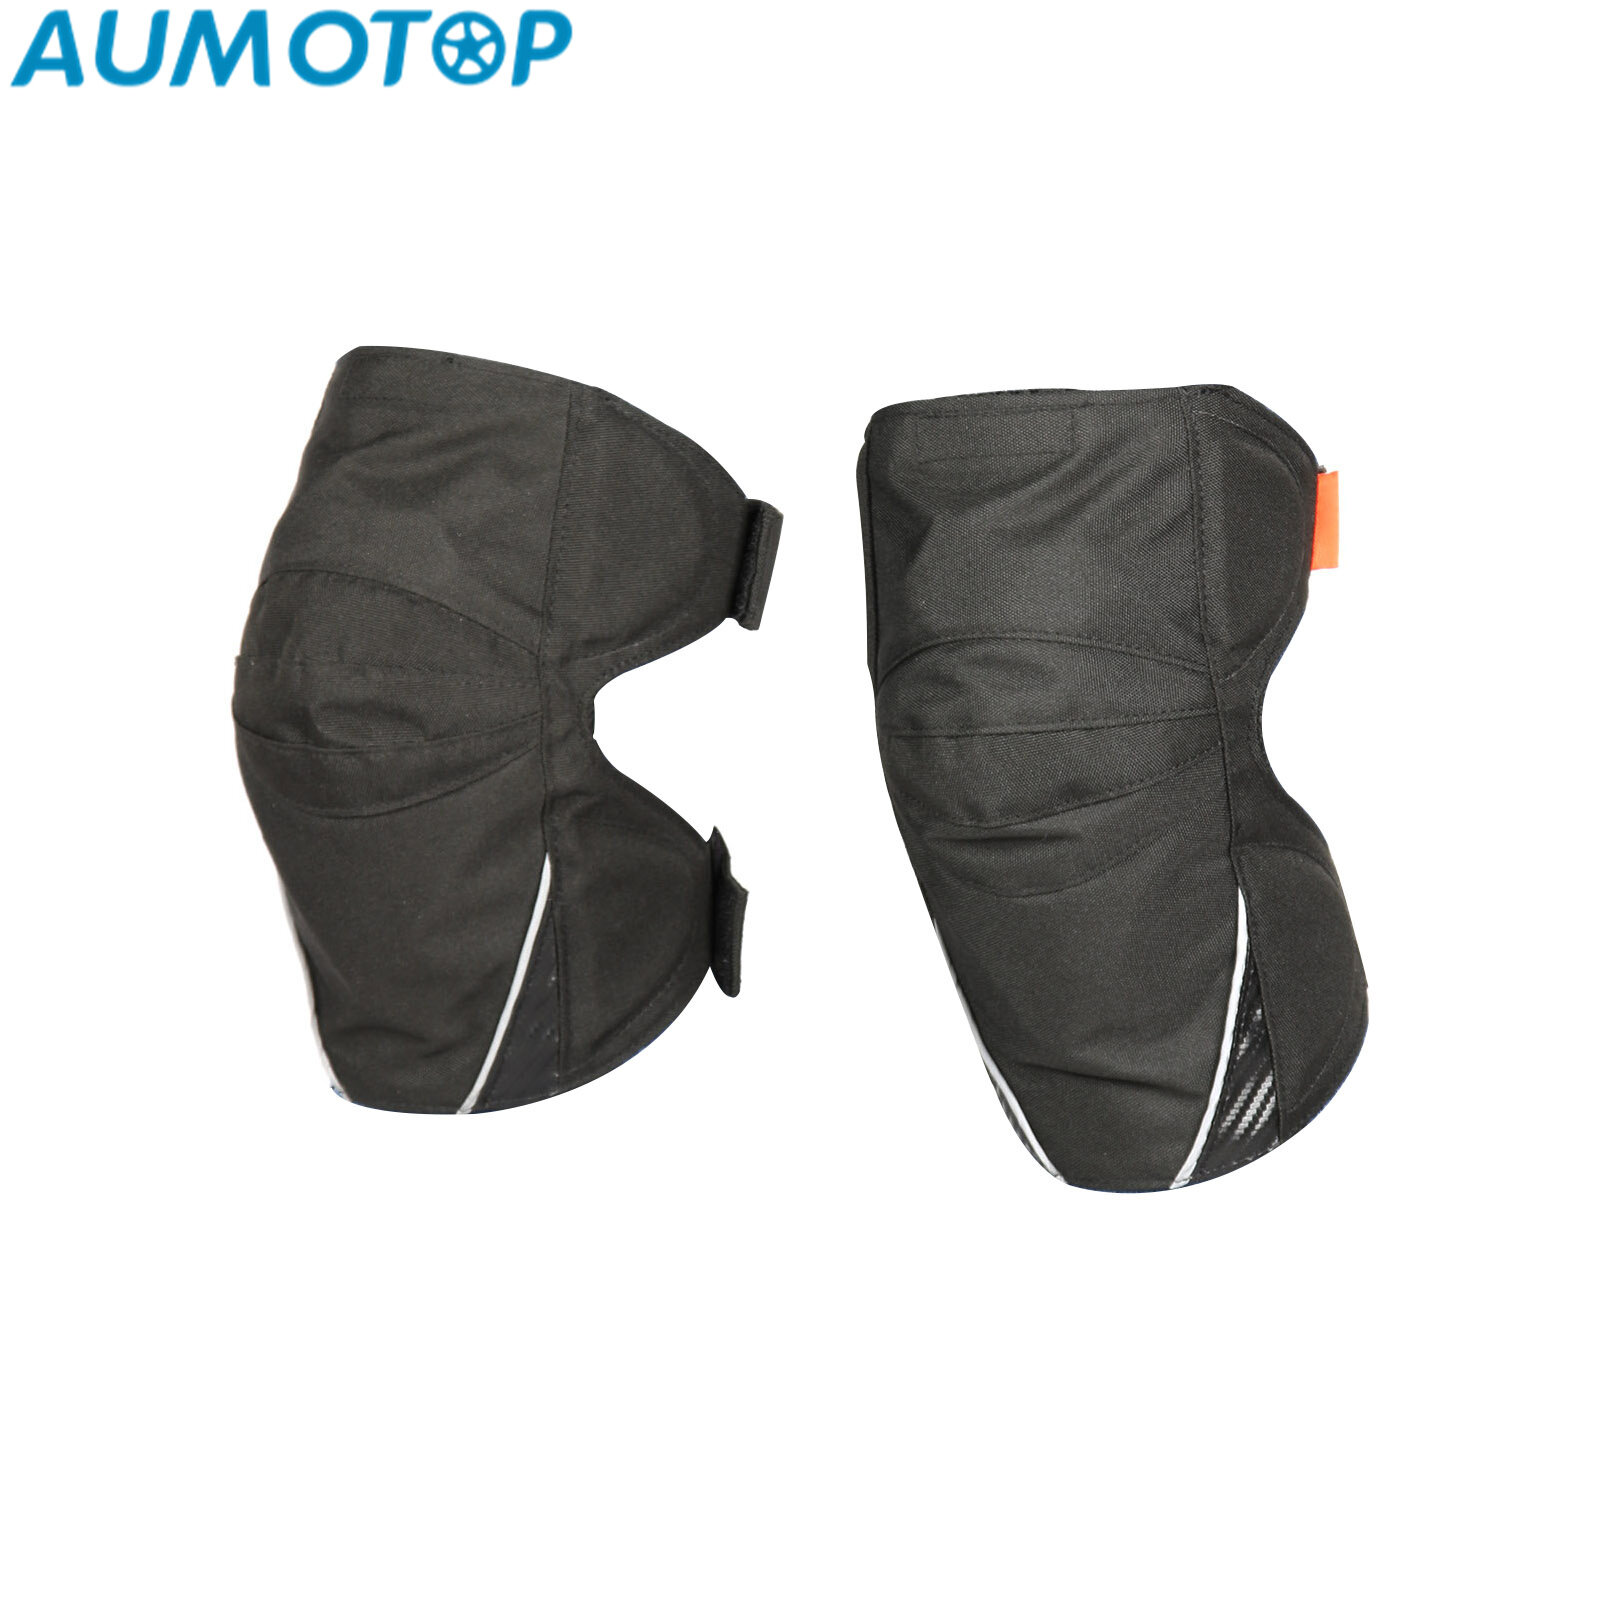 KKmoon One Pair Motorcycle Riding Knee Pads Adjustable Knee Protectors for